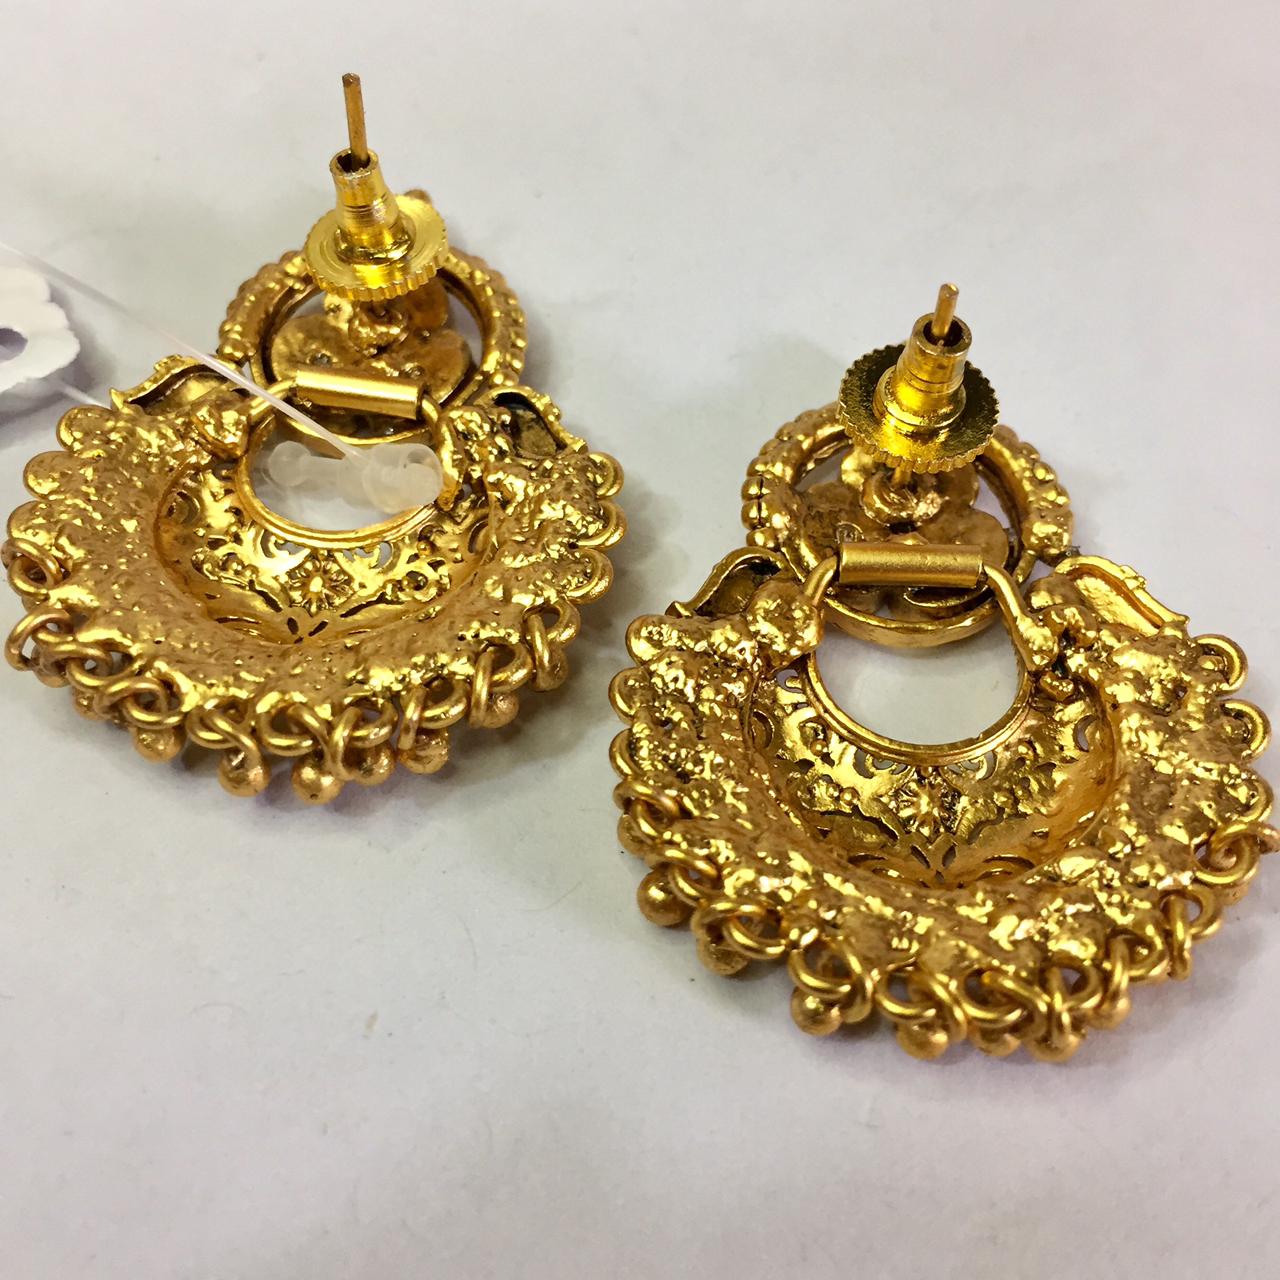 Indra  Sons Jewellers on Instagram Item Ram Leela Top Weight 75 lal  Price DMInbox jewellery 24k gold ramleela top jhumka gan   Jewelry Leela Jhumka